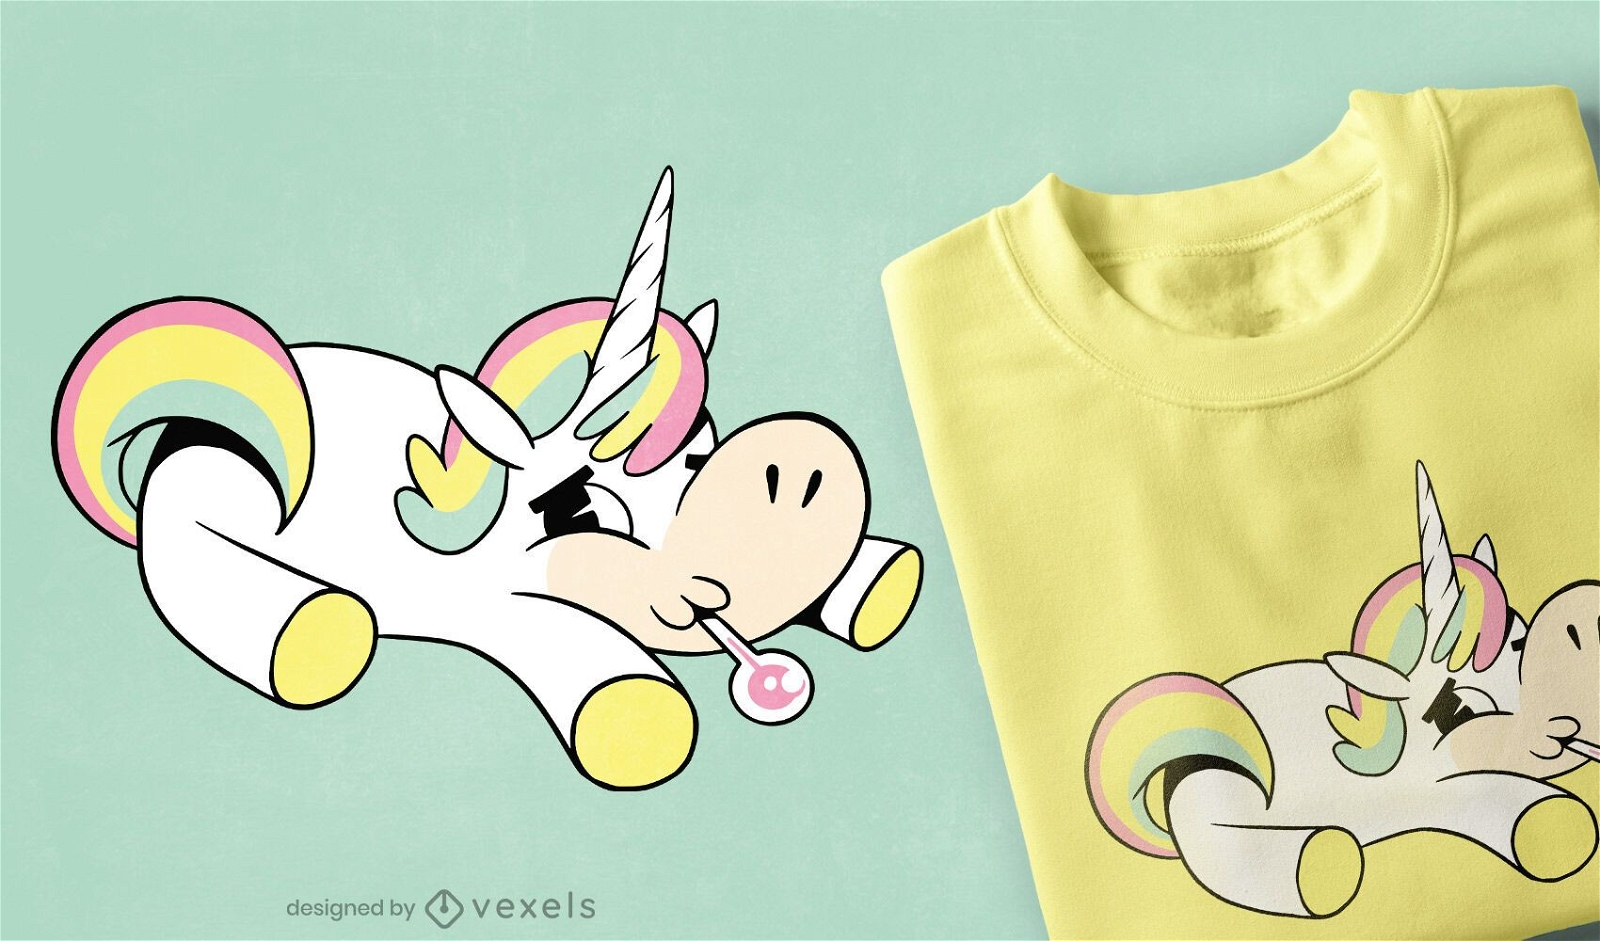 Sick unicorn t-shirt design